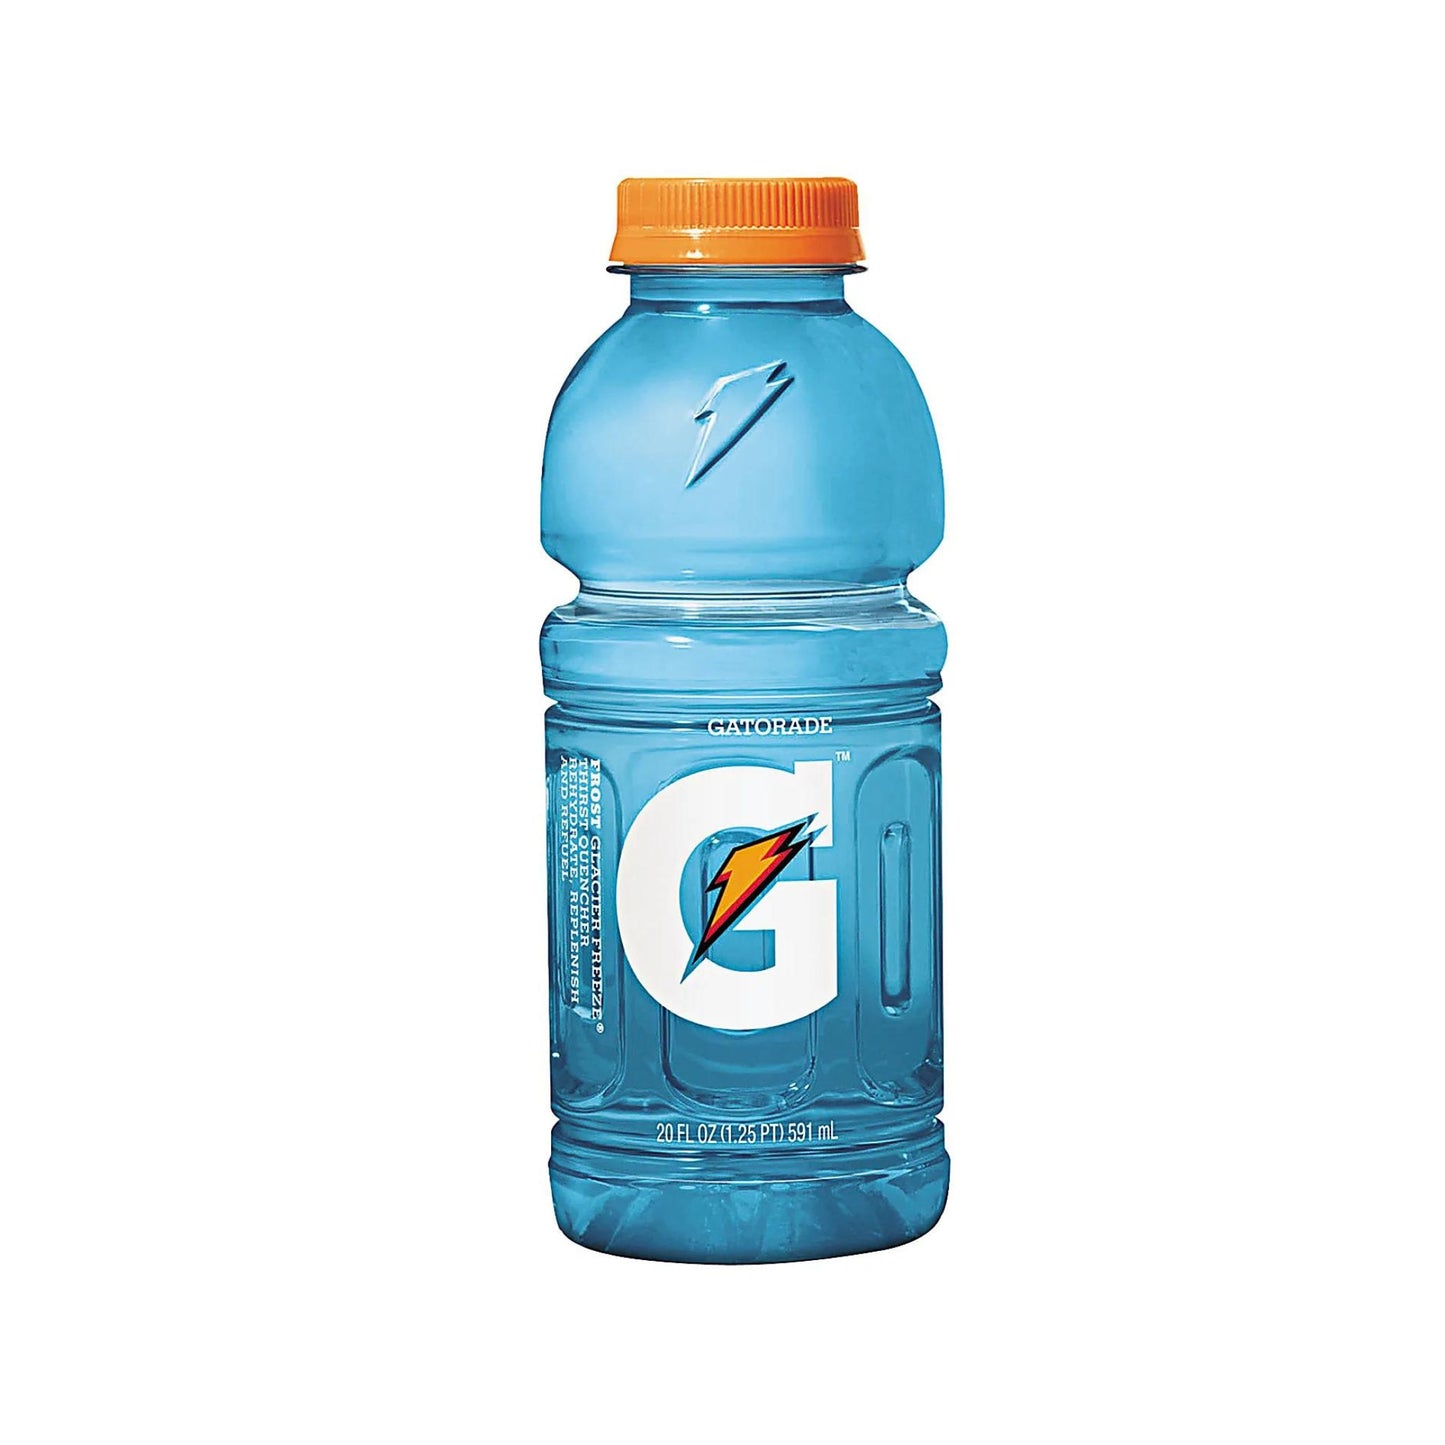 Gatorade Thirst Quencher Bottled Drink - Frost Glacier Freeze Flavor - 20 fl oz  24 per Box